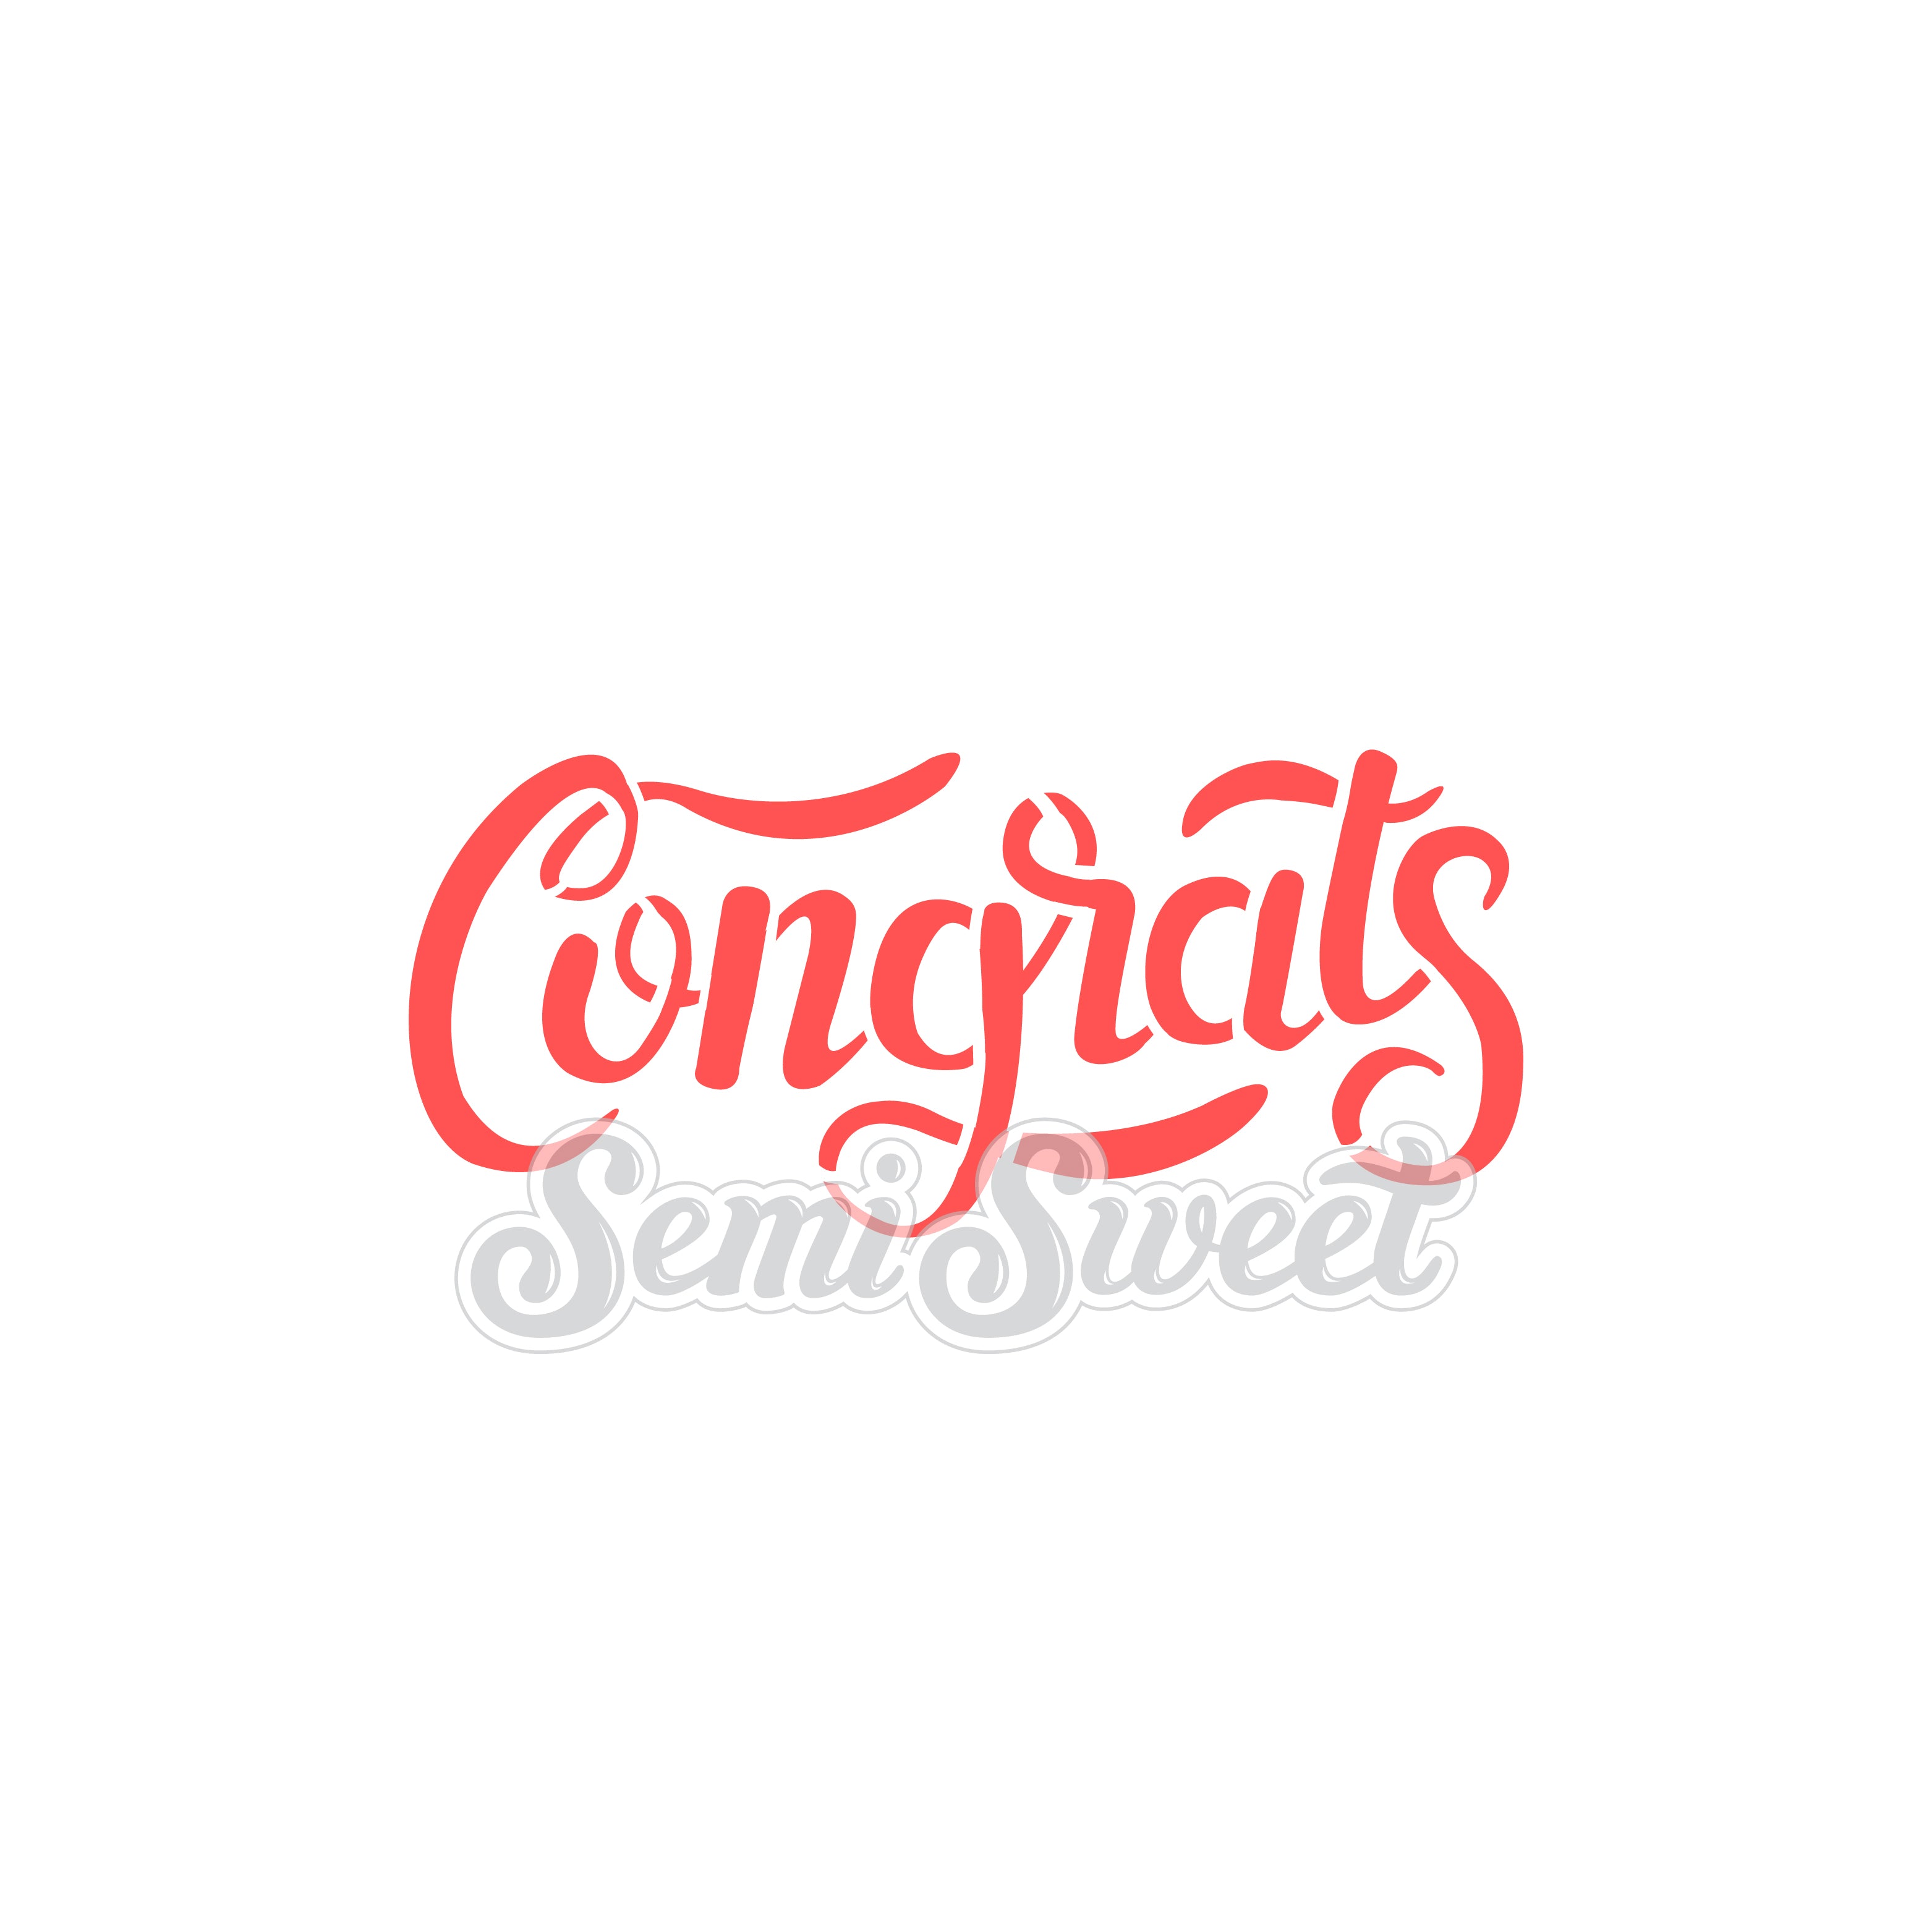 congrats_stencil